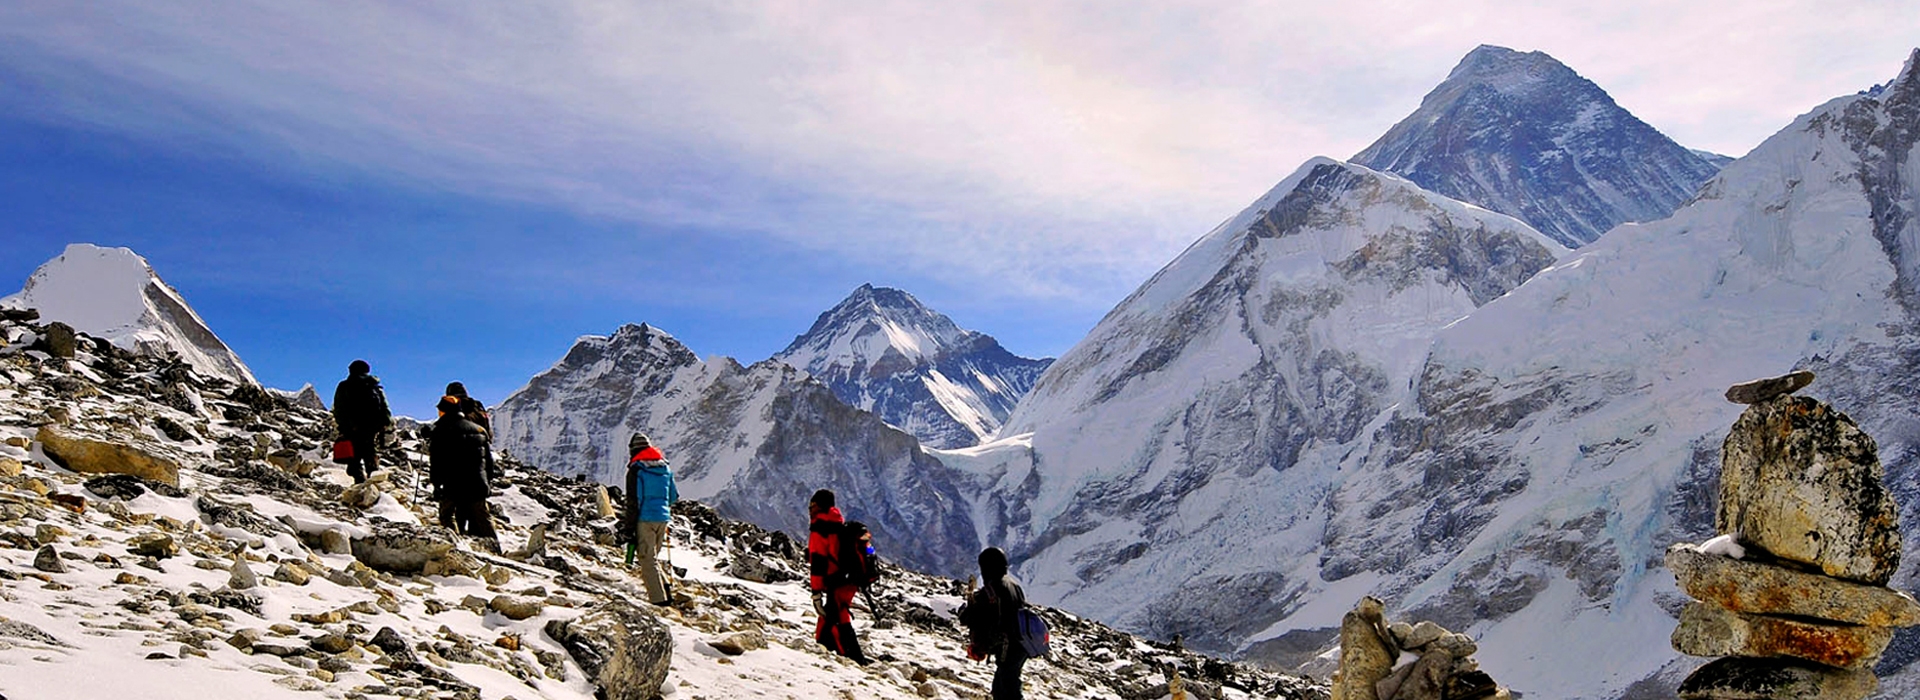 Everest Three Passes Trek- Chola pass, Dzongla, Renjo La Pass